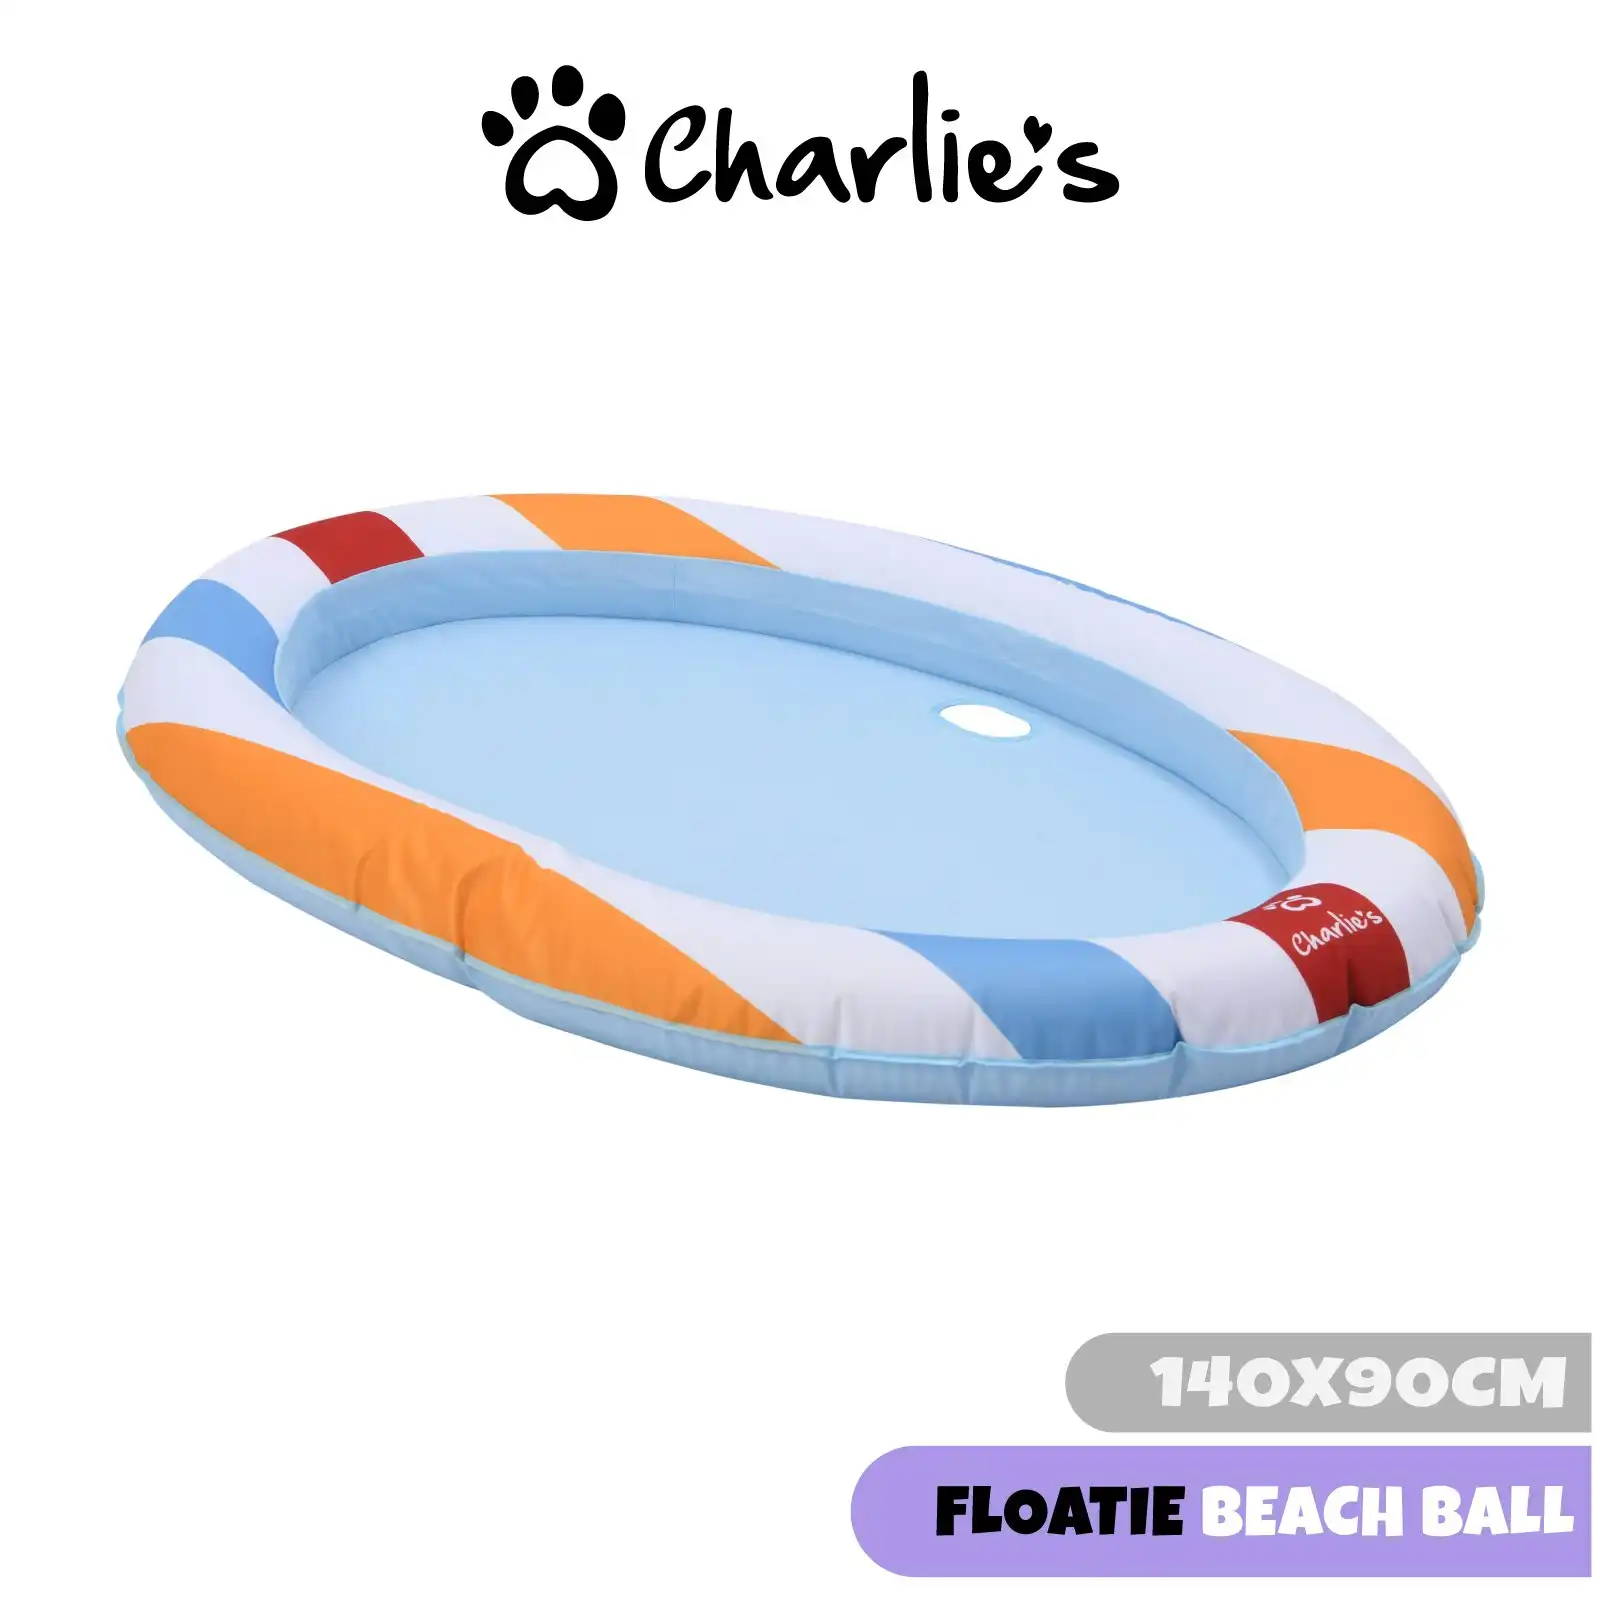 Charlie's Dog Floaties Beach Ball 140x90cm